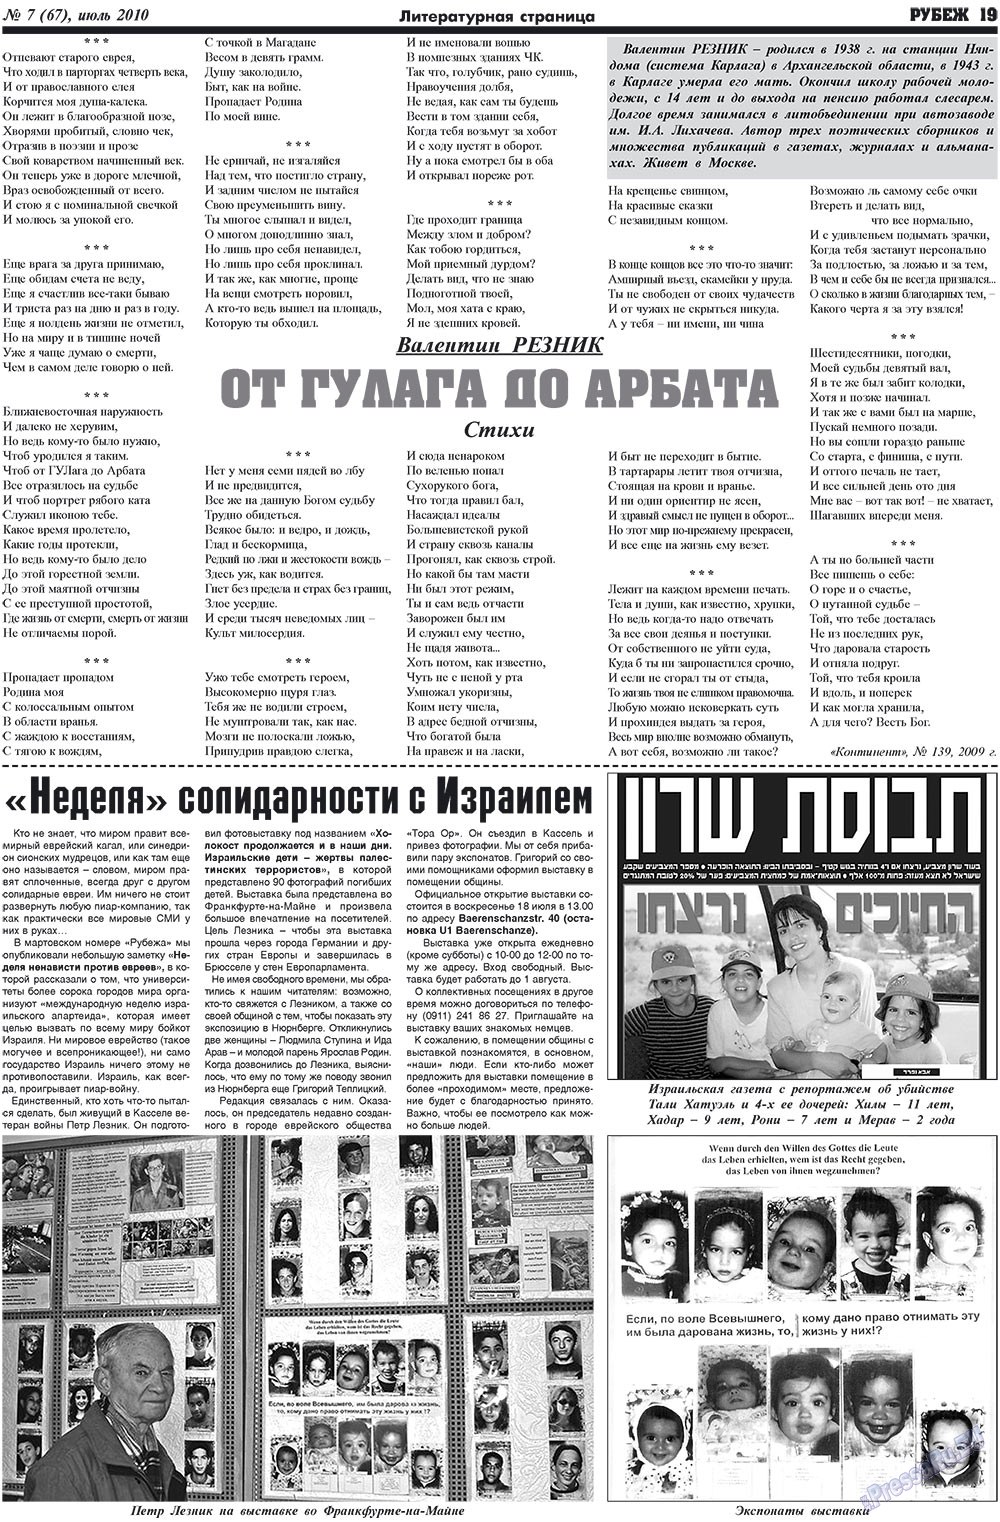 Рубеж, газета. 2010 №7 стр.19